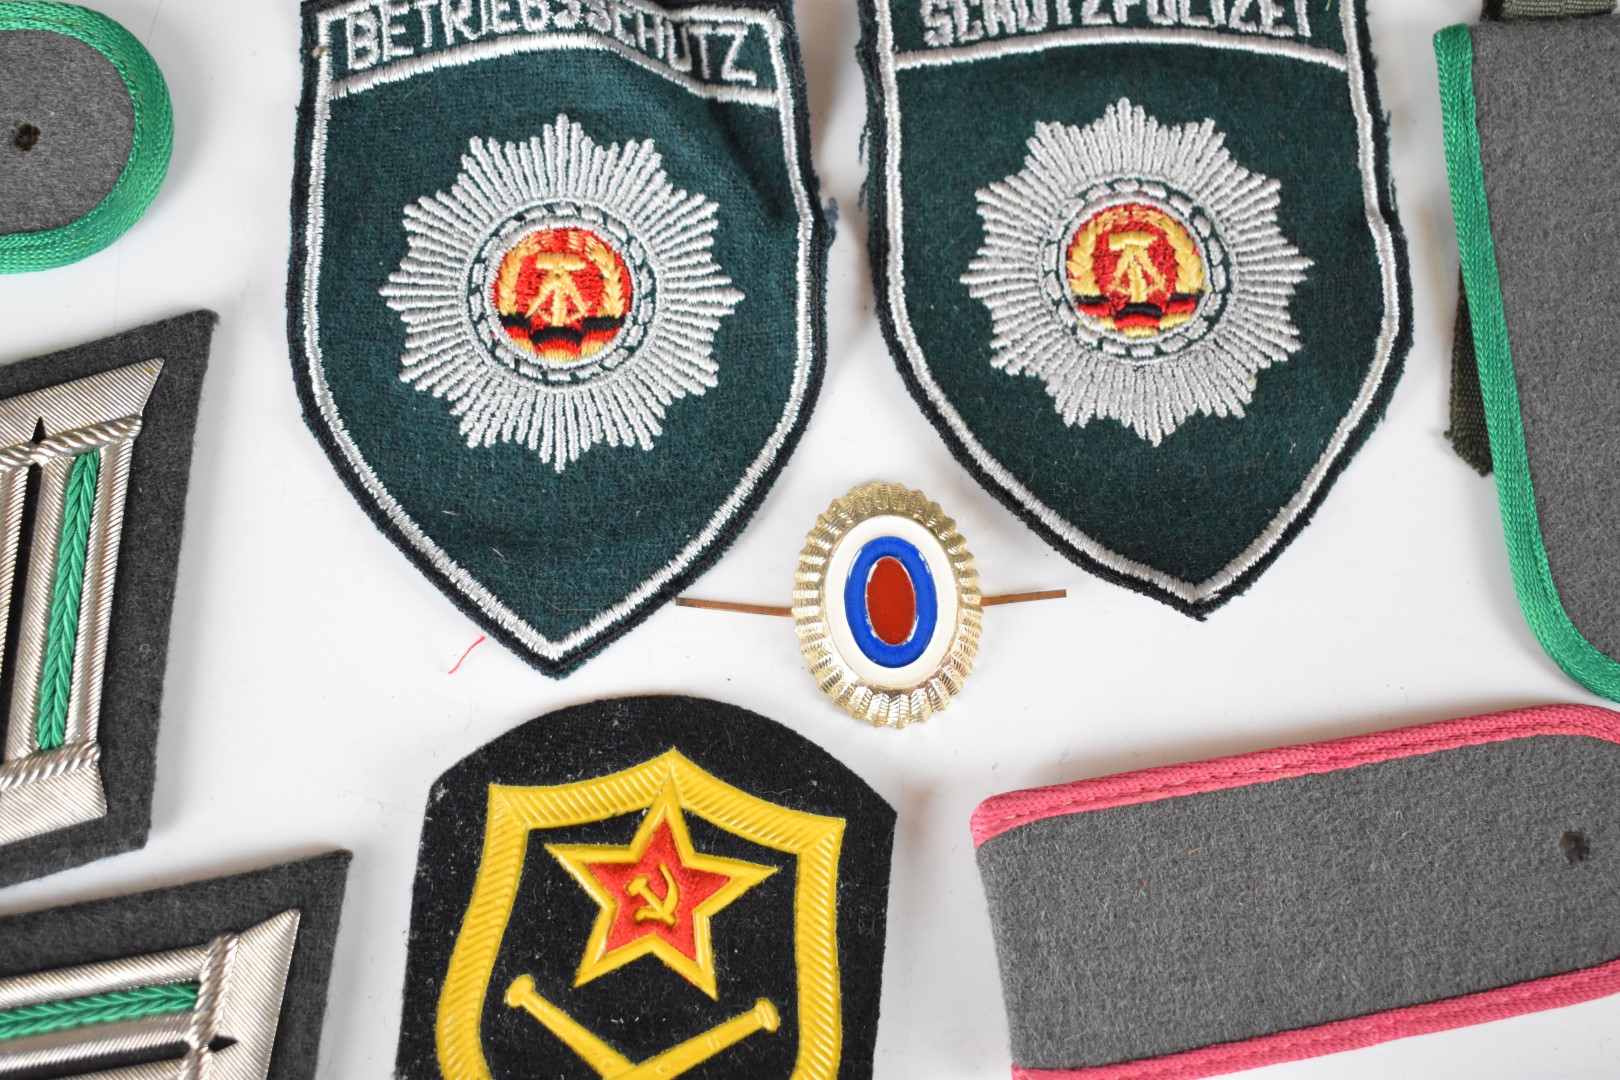 Russian / East German cloth badges, rank insignia etc - Image 5 of 6